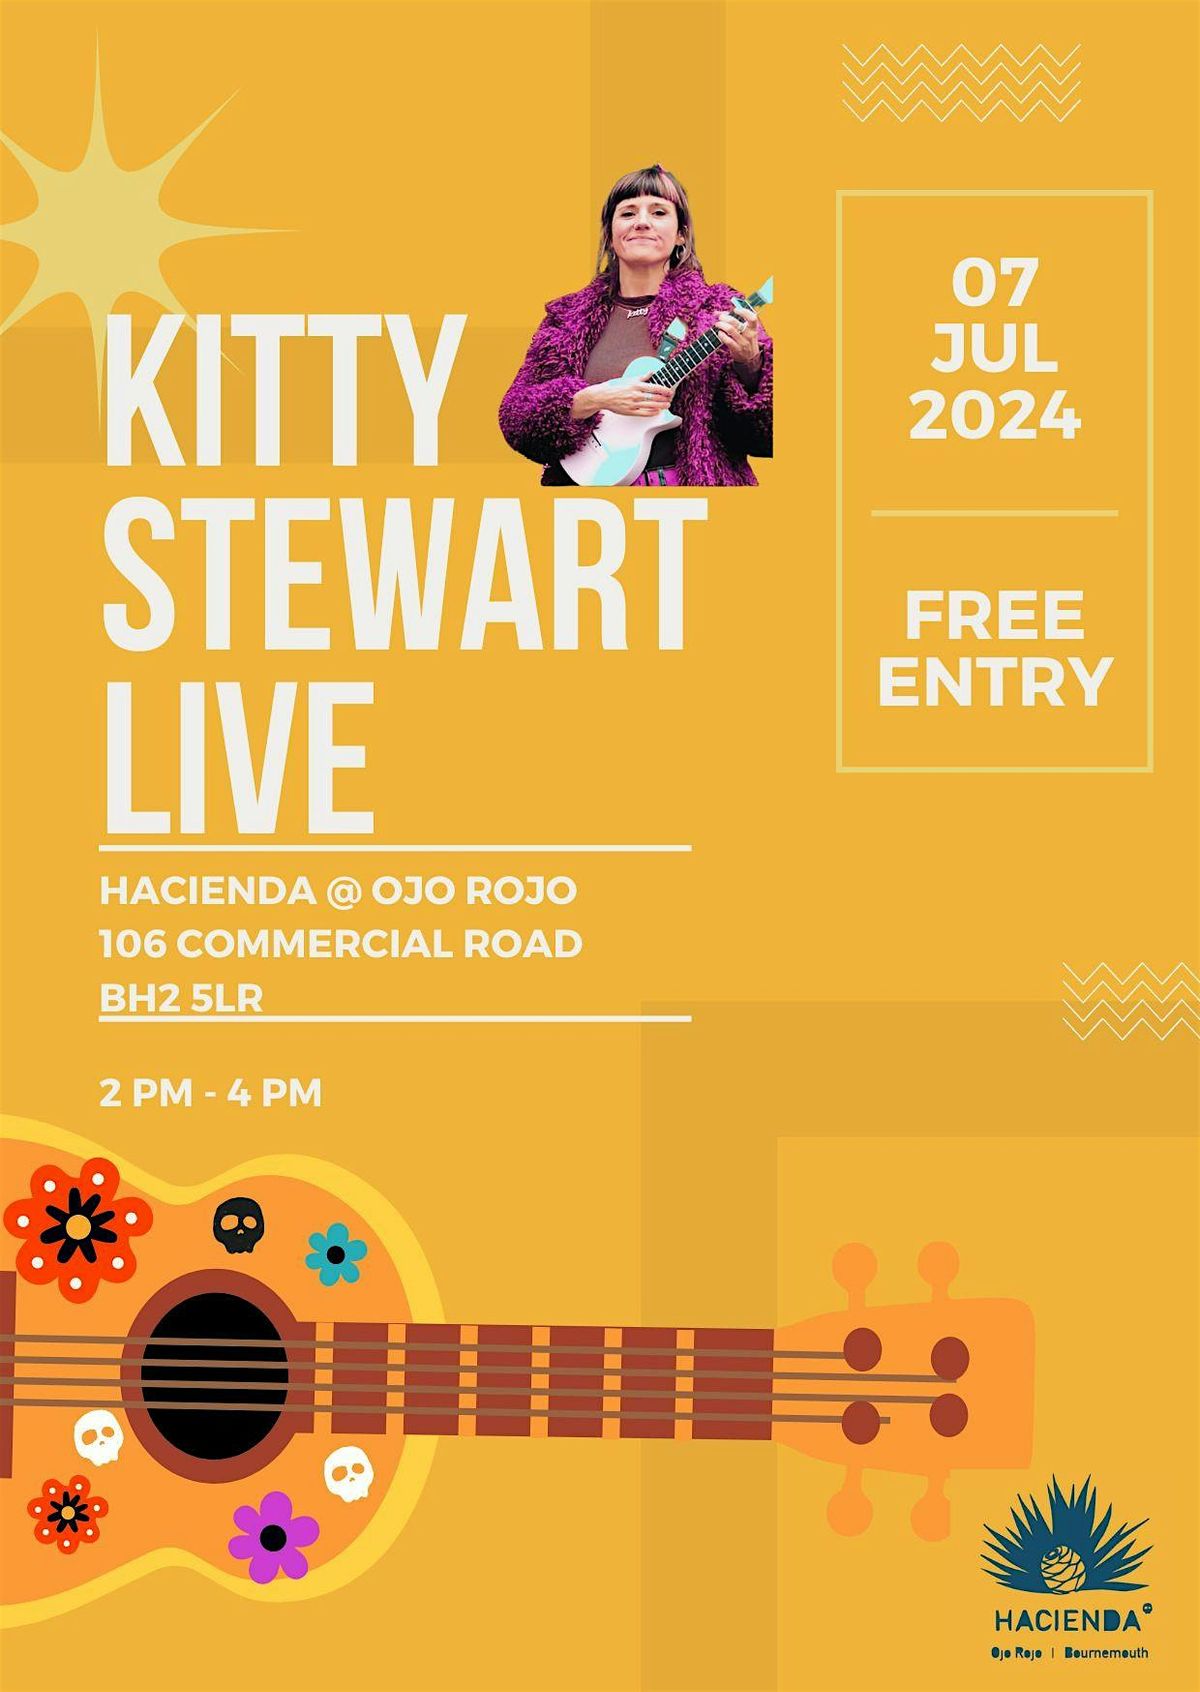 Kitty Stewart Live @ The Hacienda